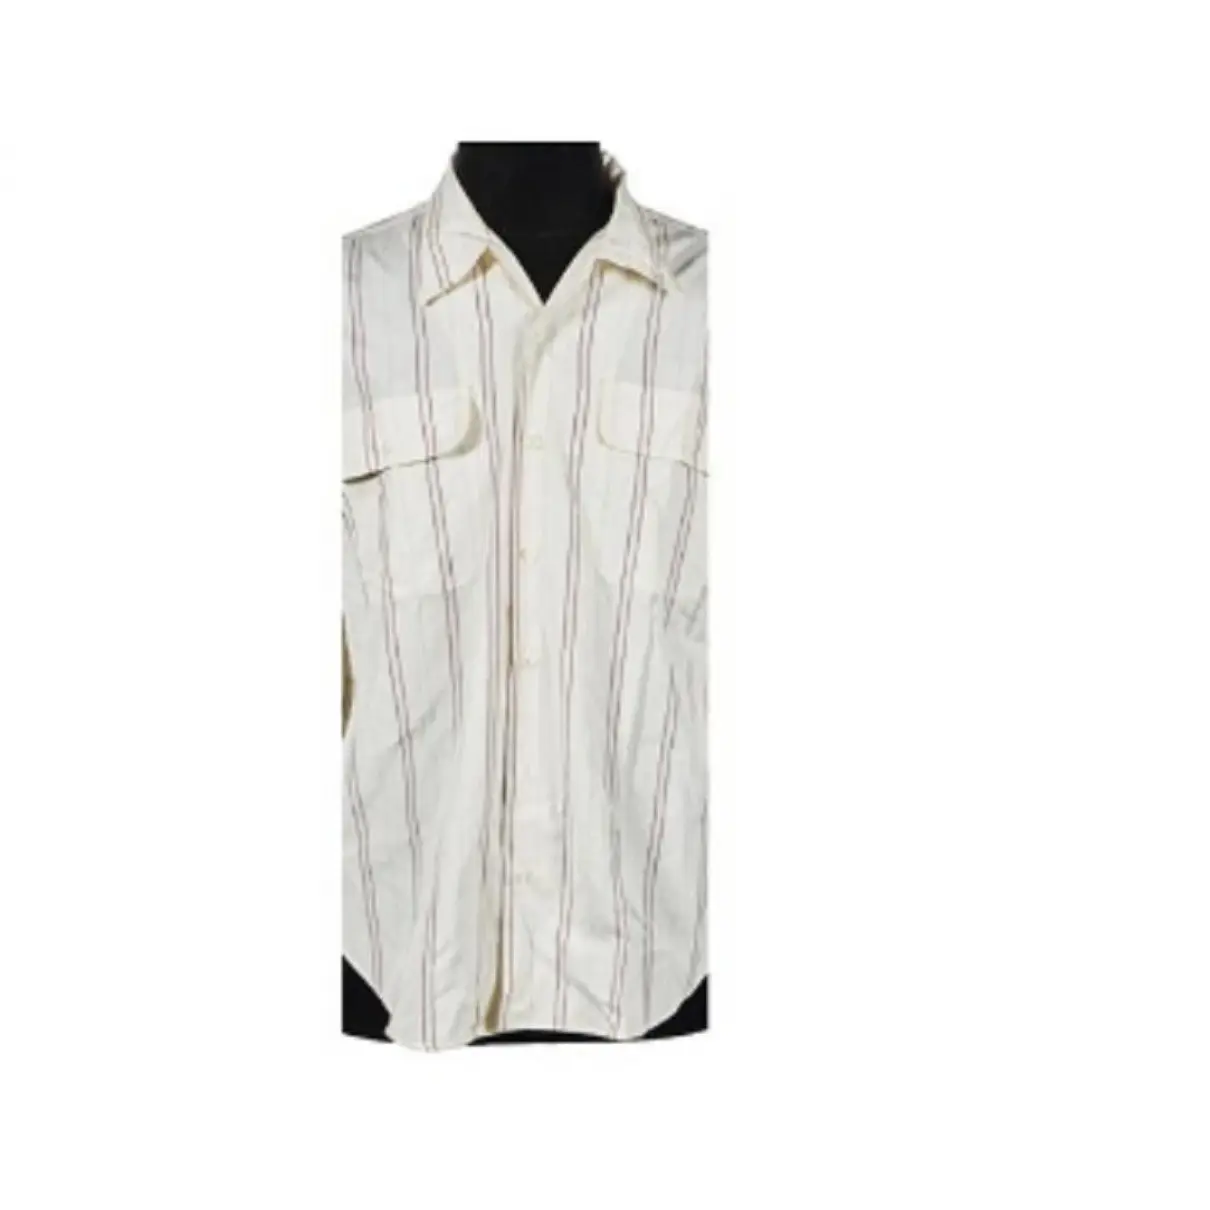 Ralph Lauren Shirt for sale - Vintage